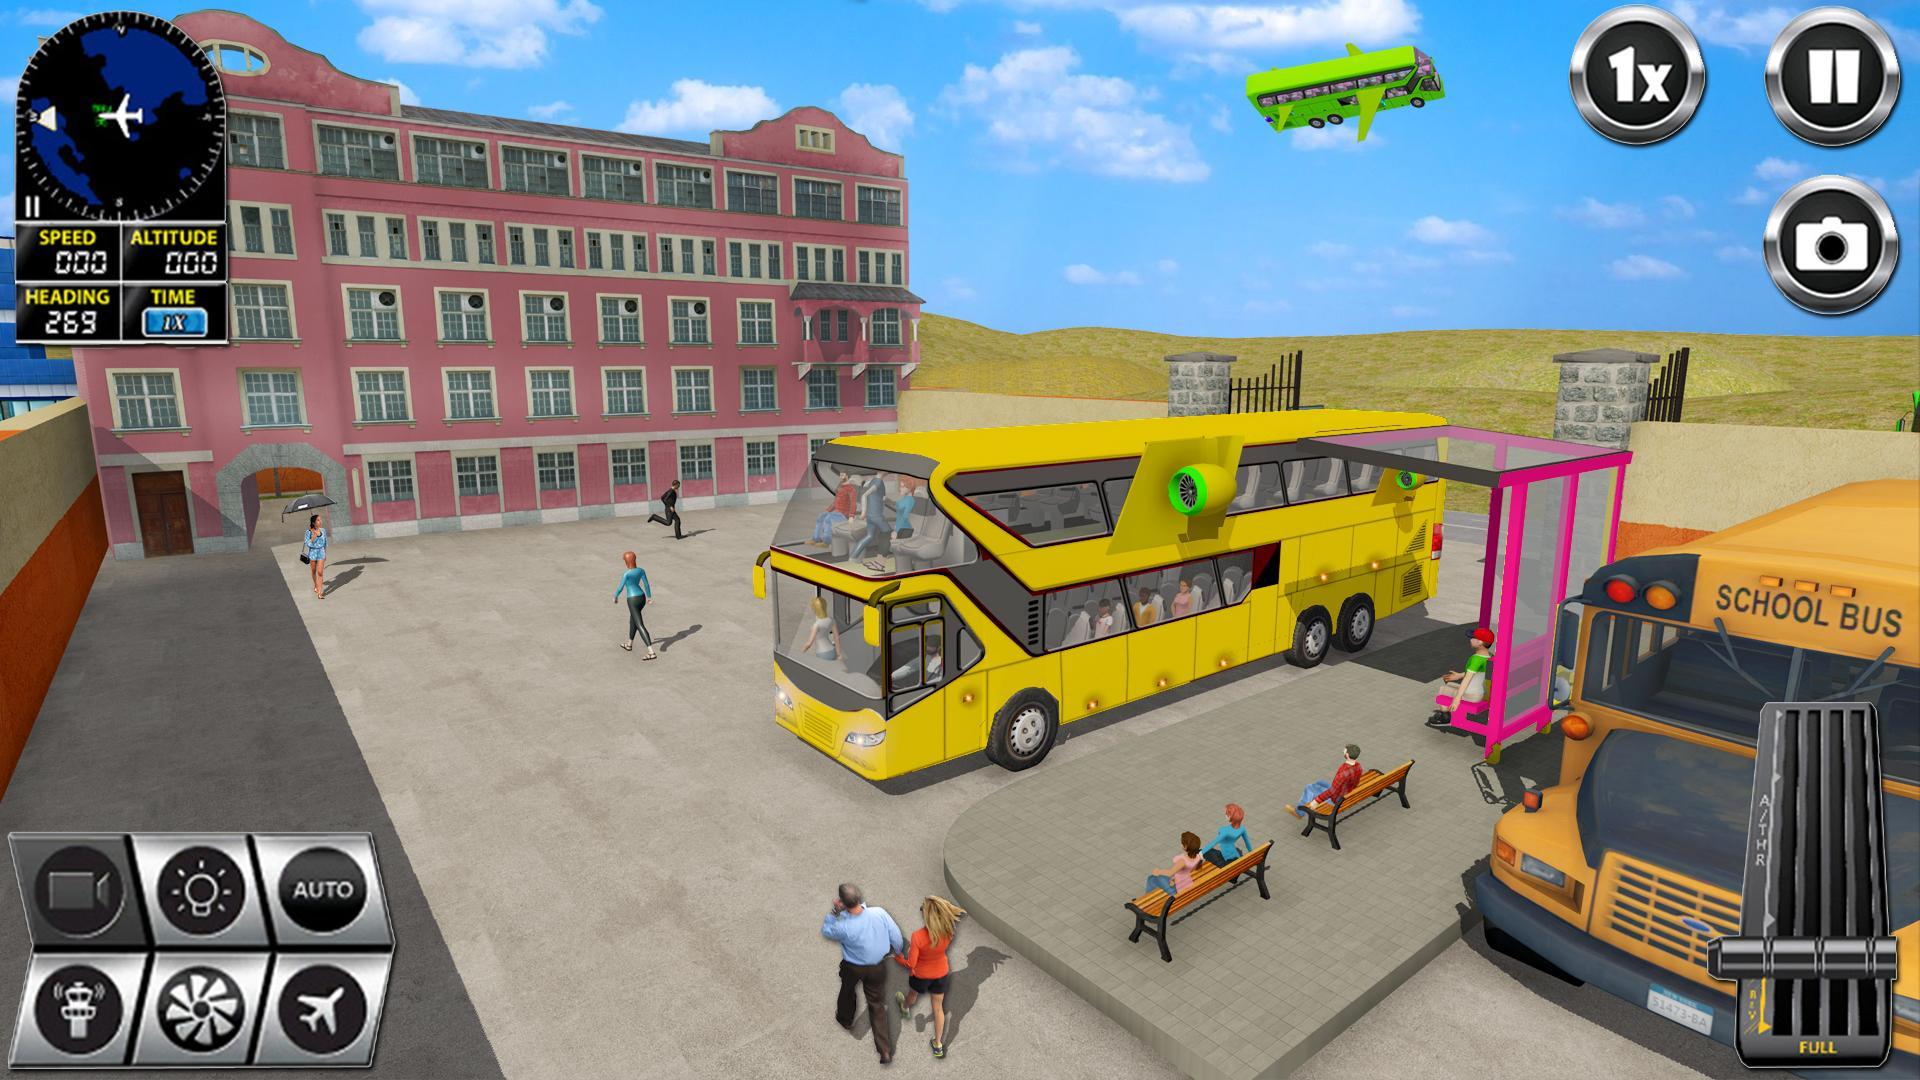 Flying Bus Driving simulator 2019: Free Bus Games 2.8 Screenshot 11